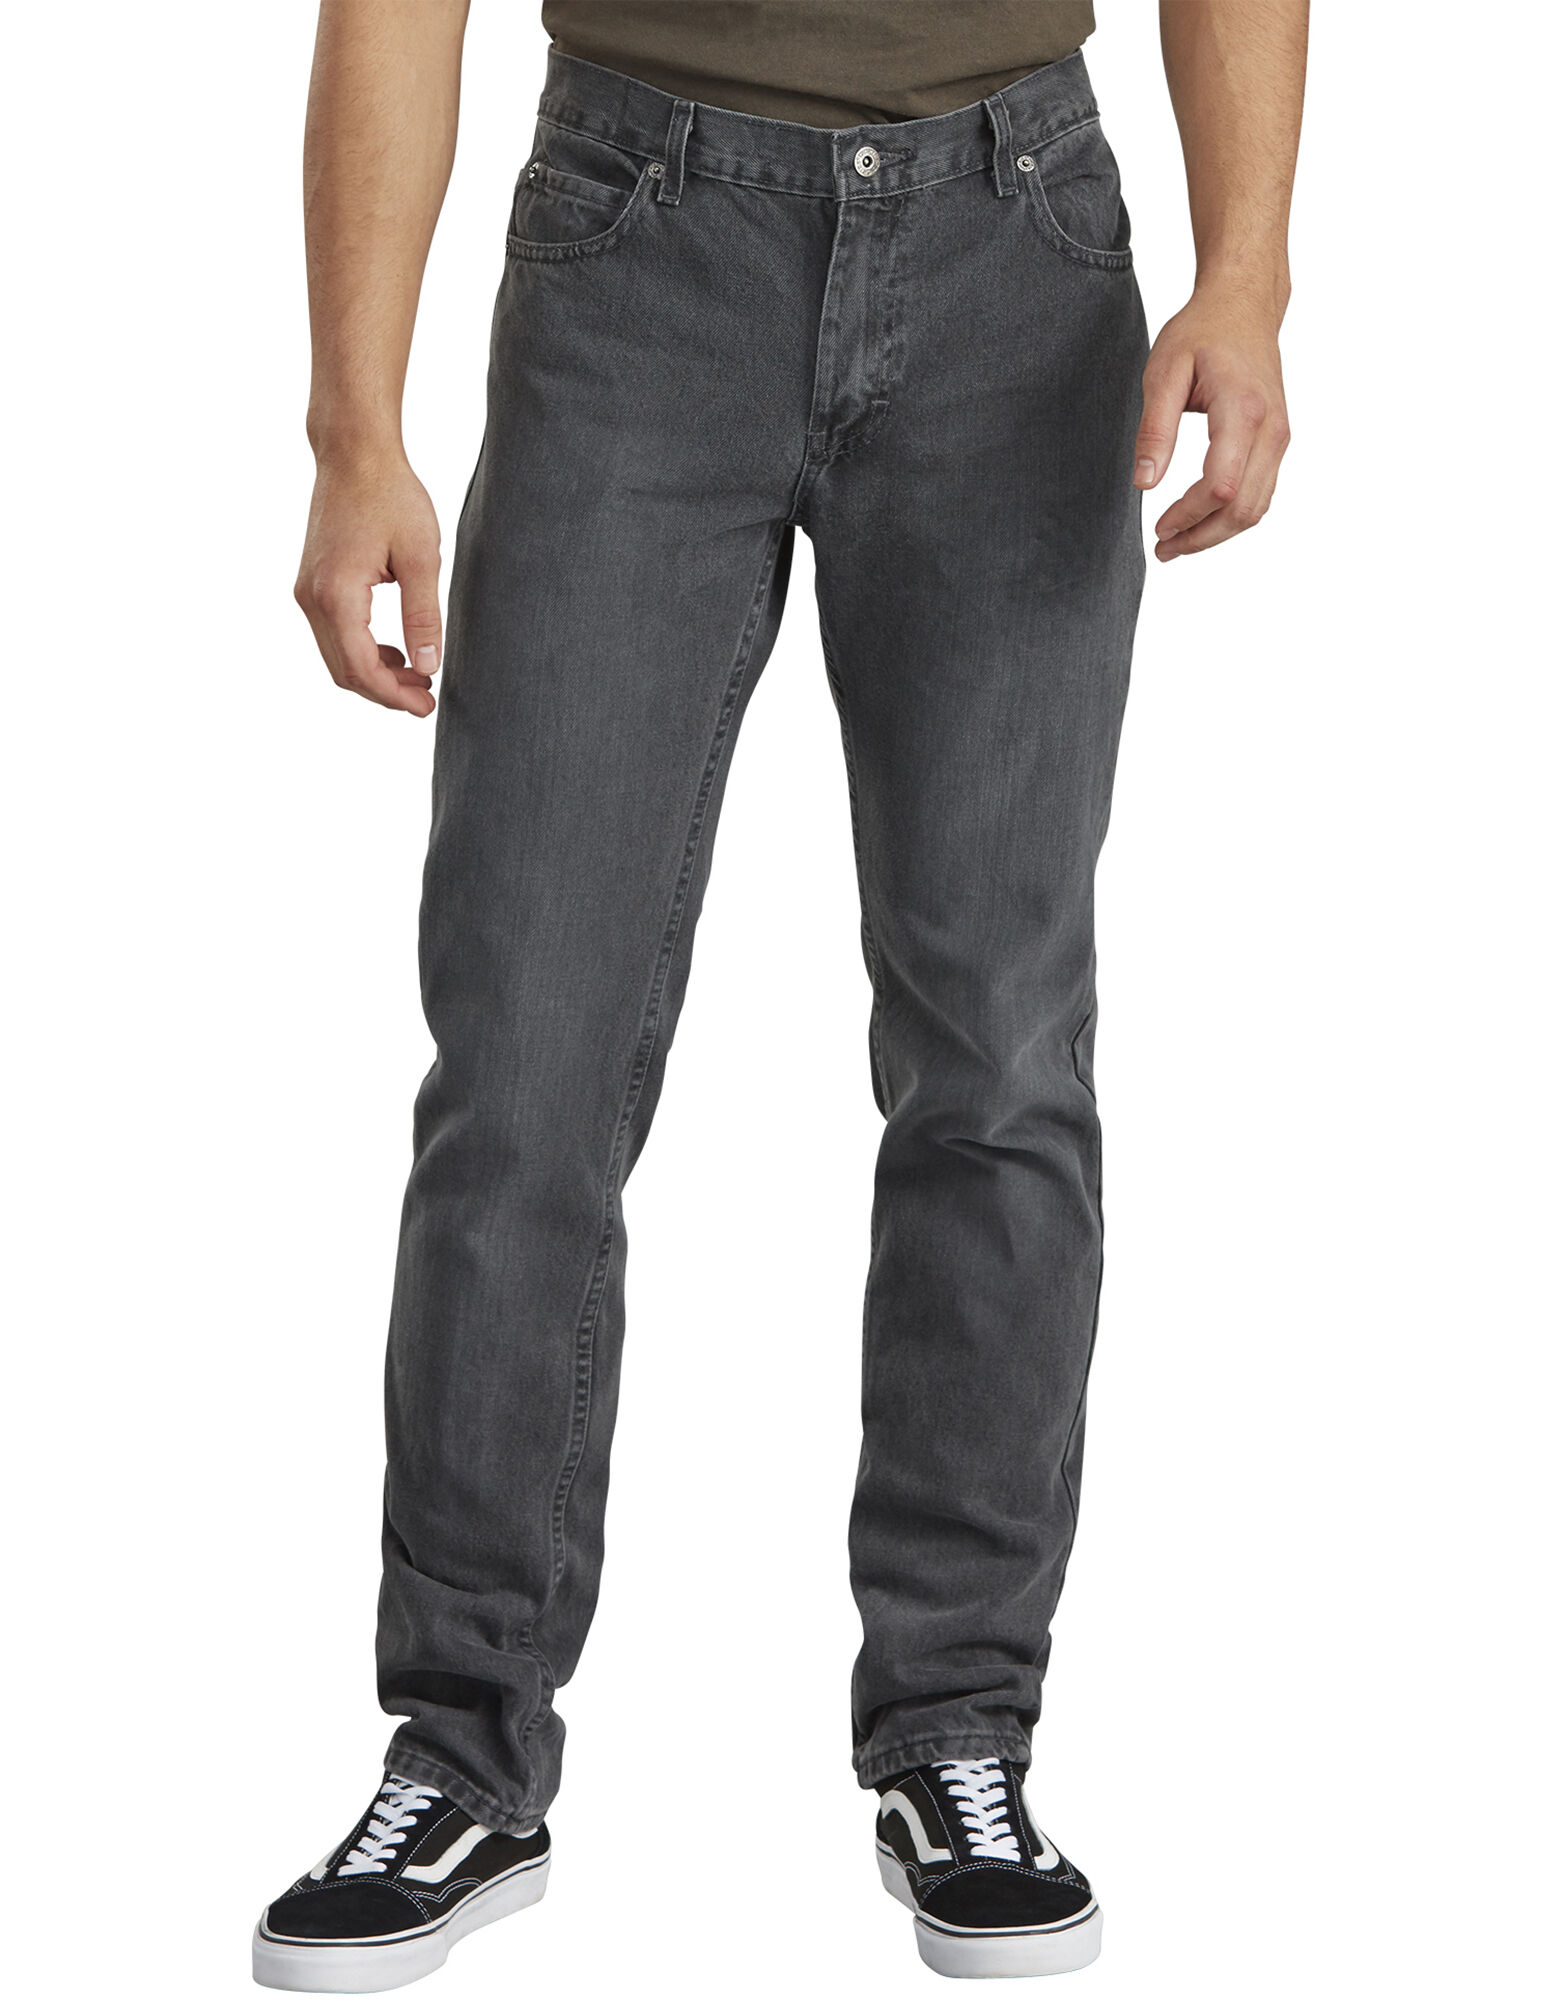 gray slim fit jeans